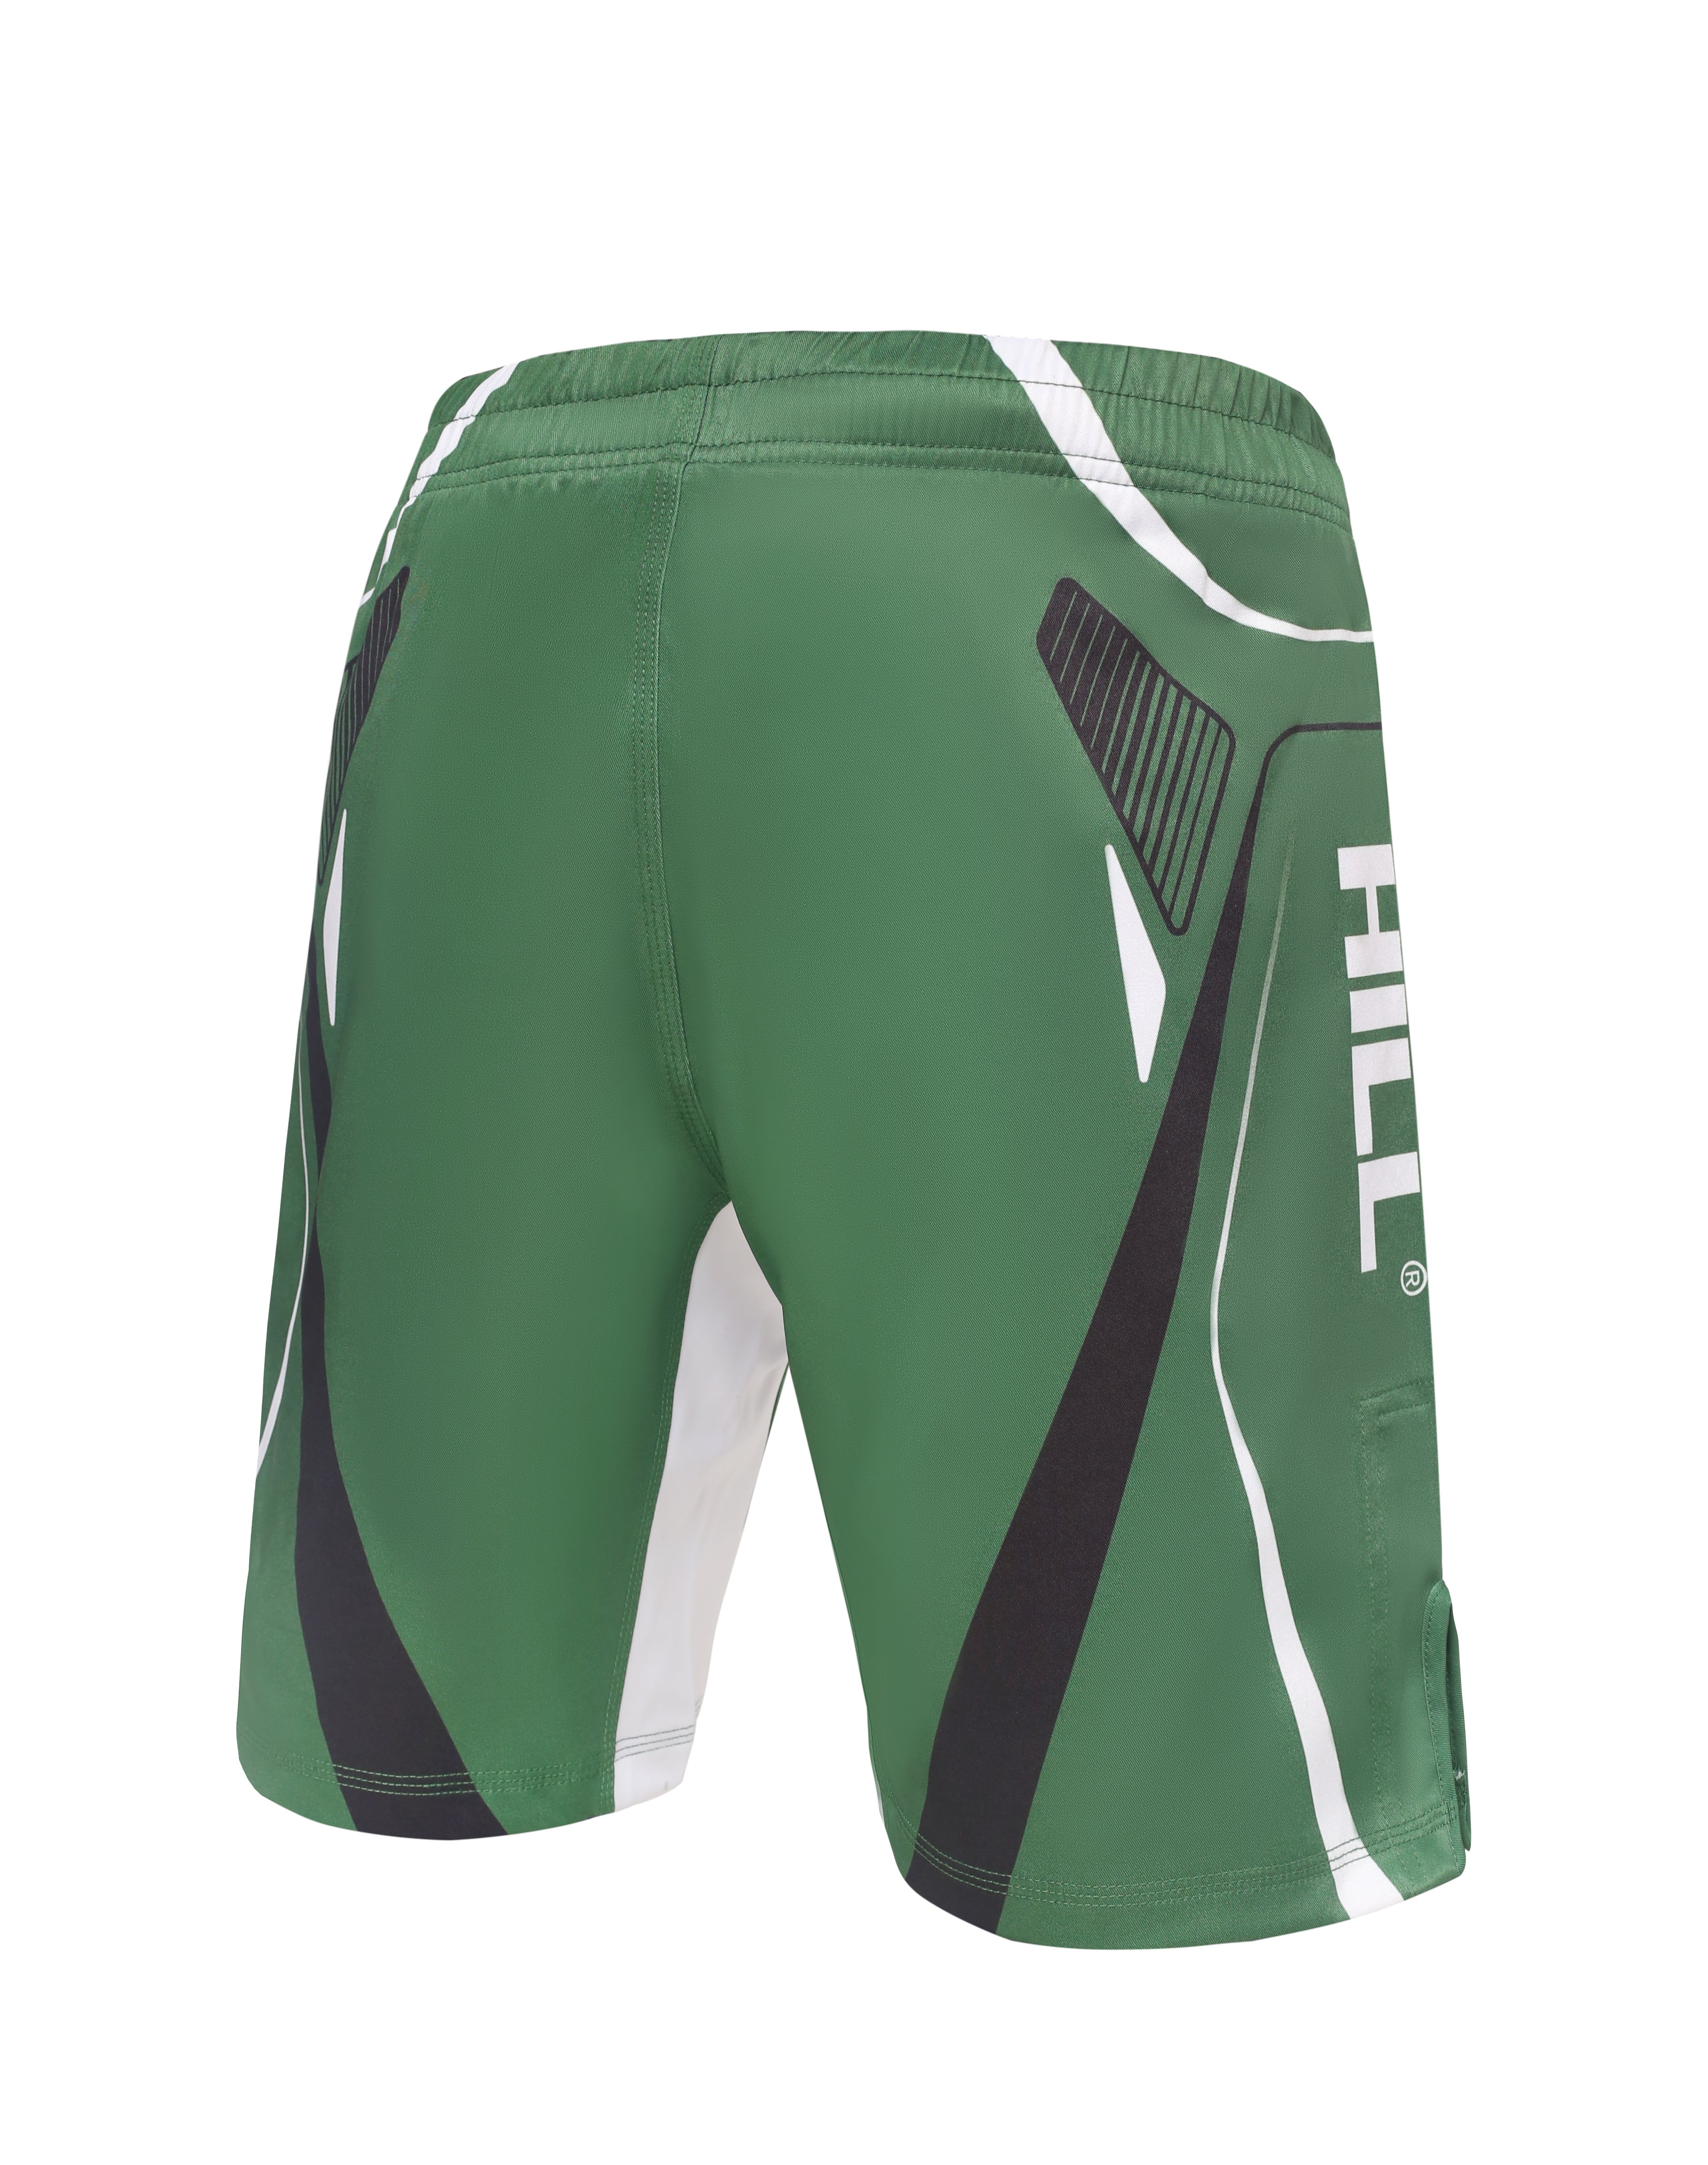 GREEN HILL New MMA Shorts Green 2023